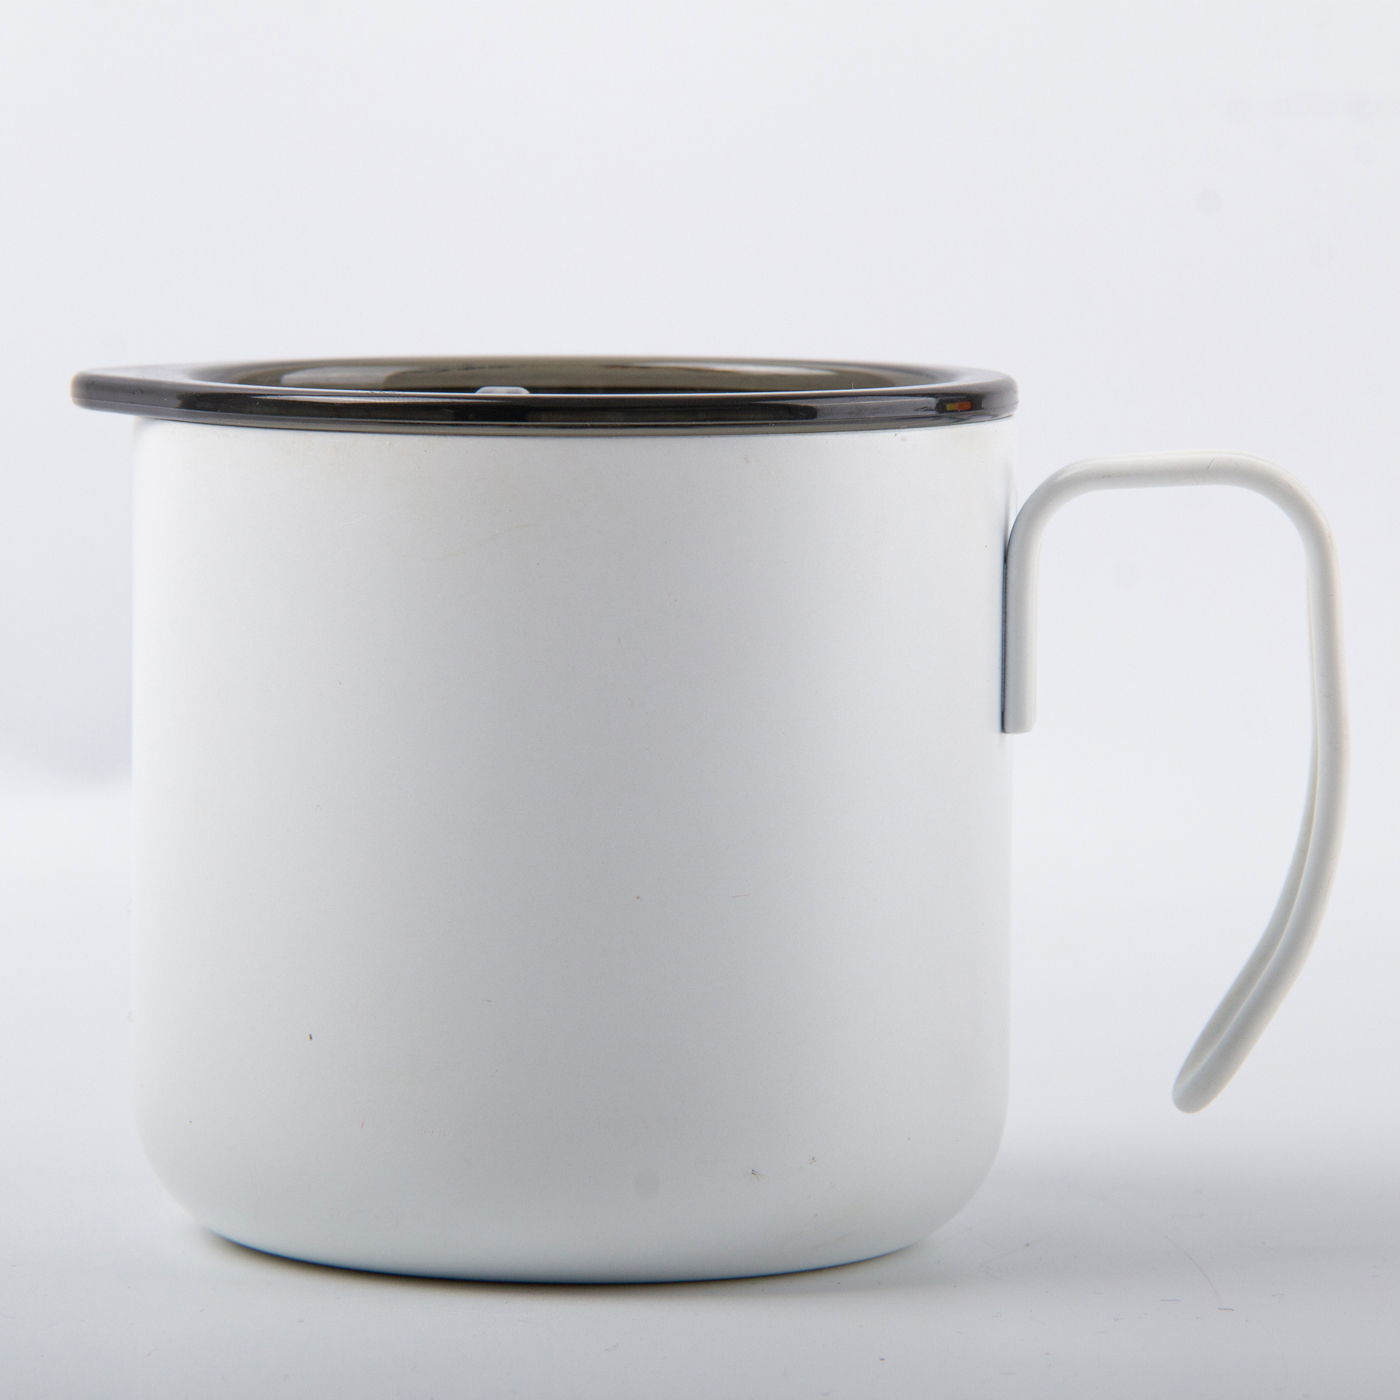 12 oz. Stainless Steel Coffee Mug With Handle4